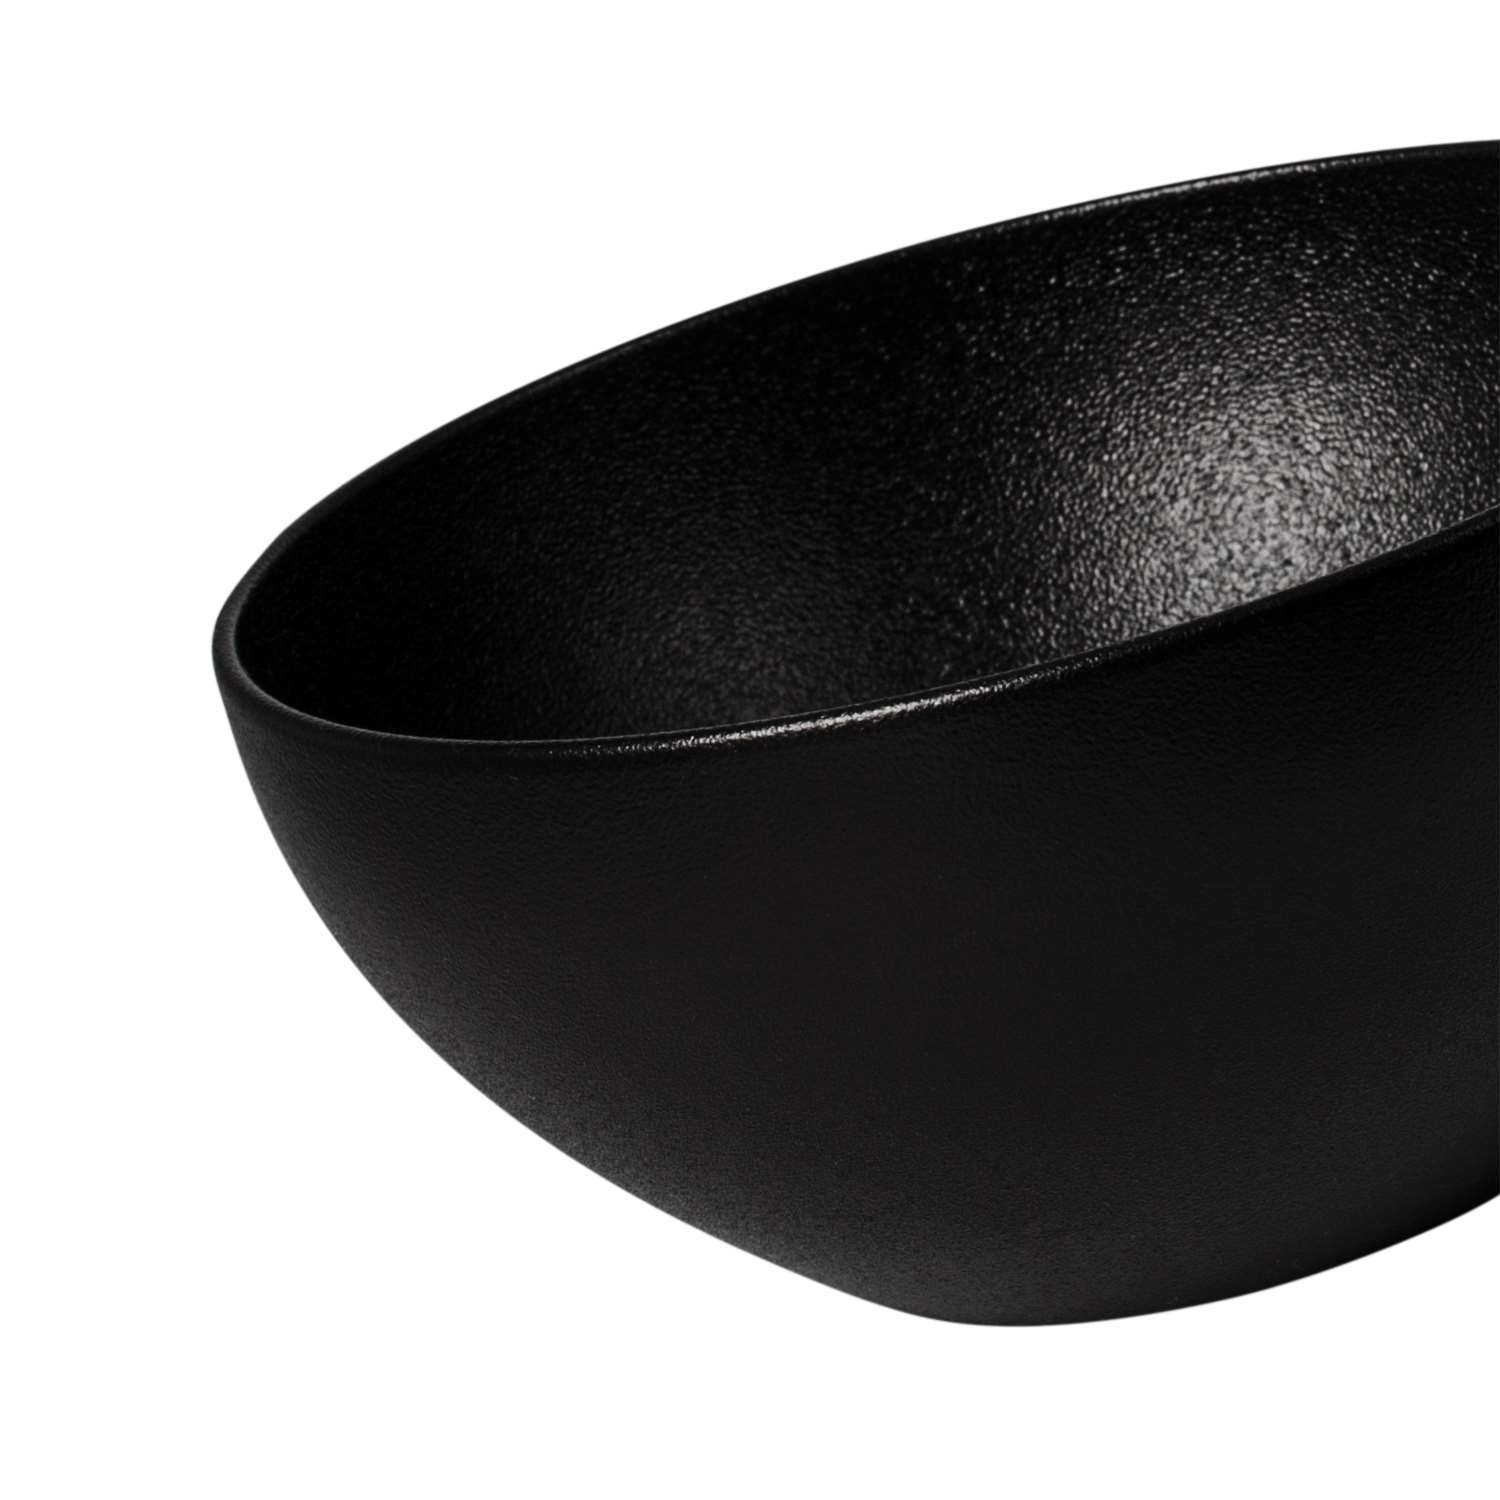 Baralee Black Sand Coupe Bowl 18 Cm